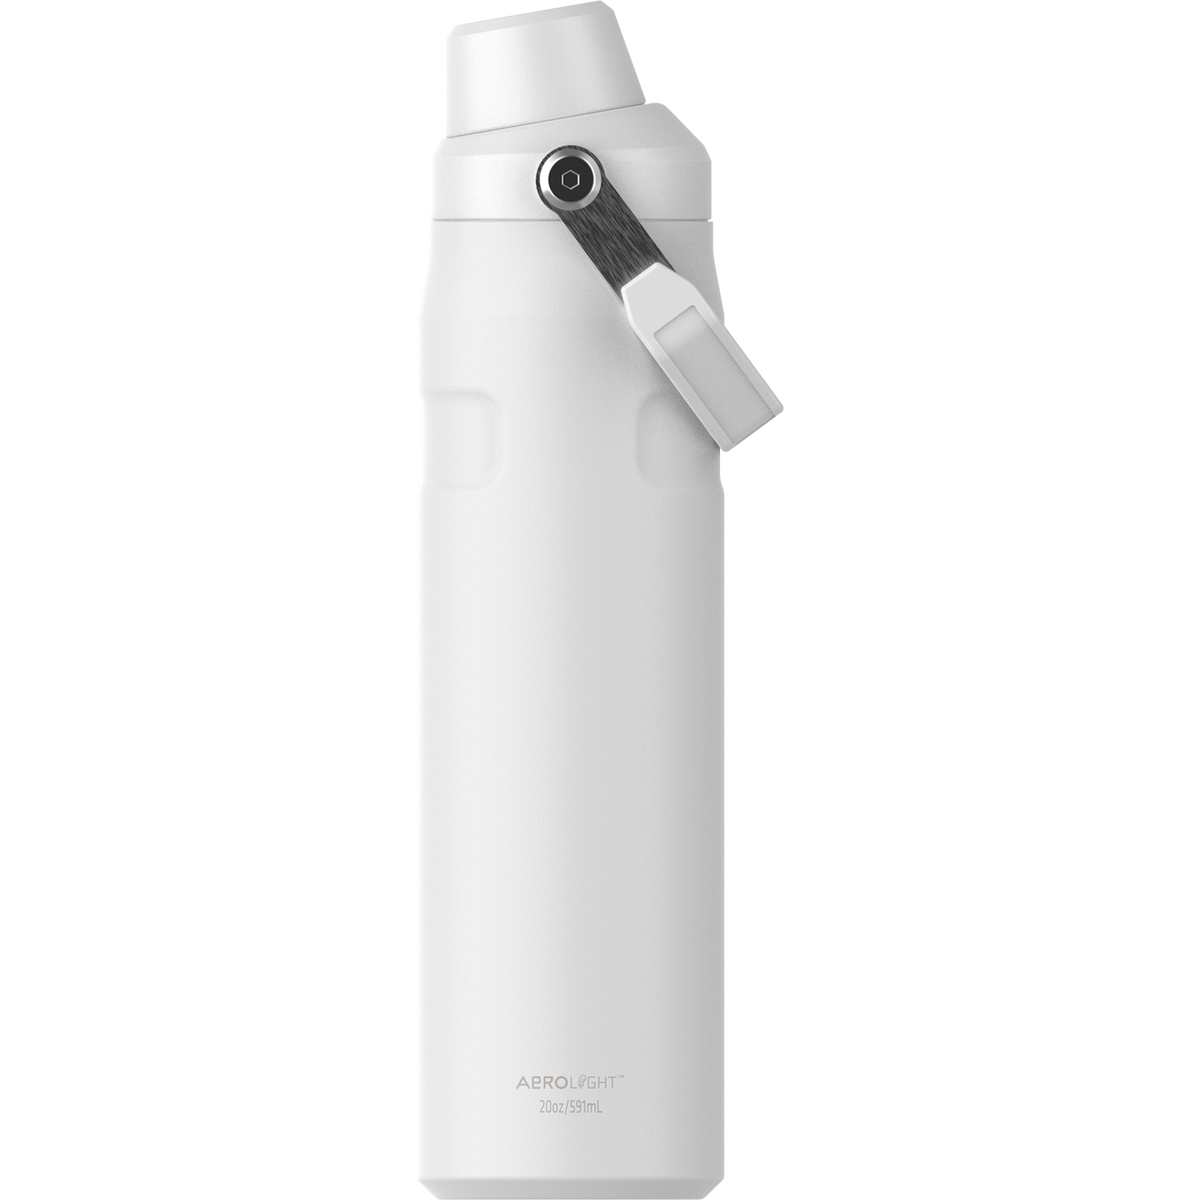 The Iceflow™ Fast Flow Bottle 0.6L